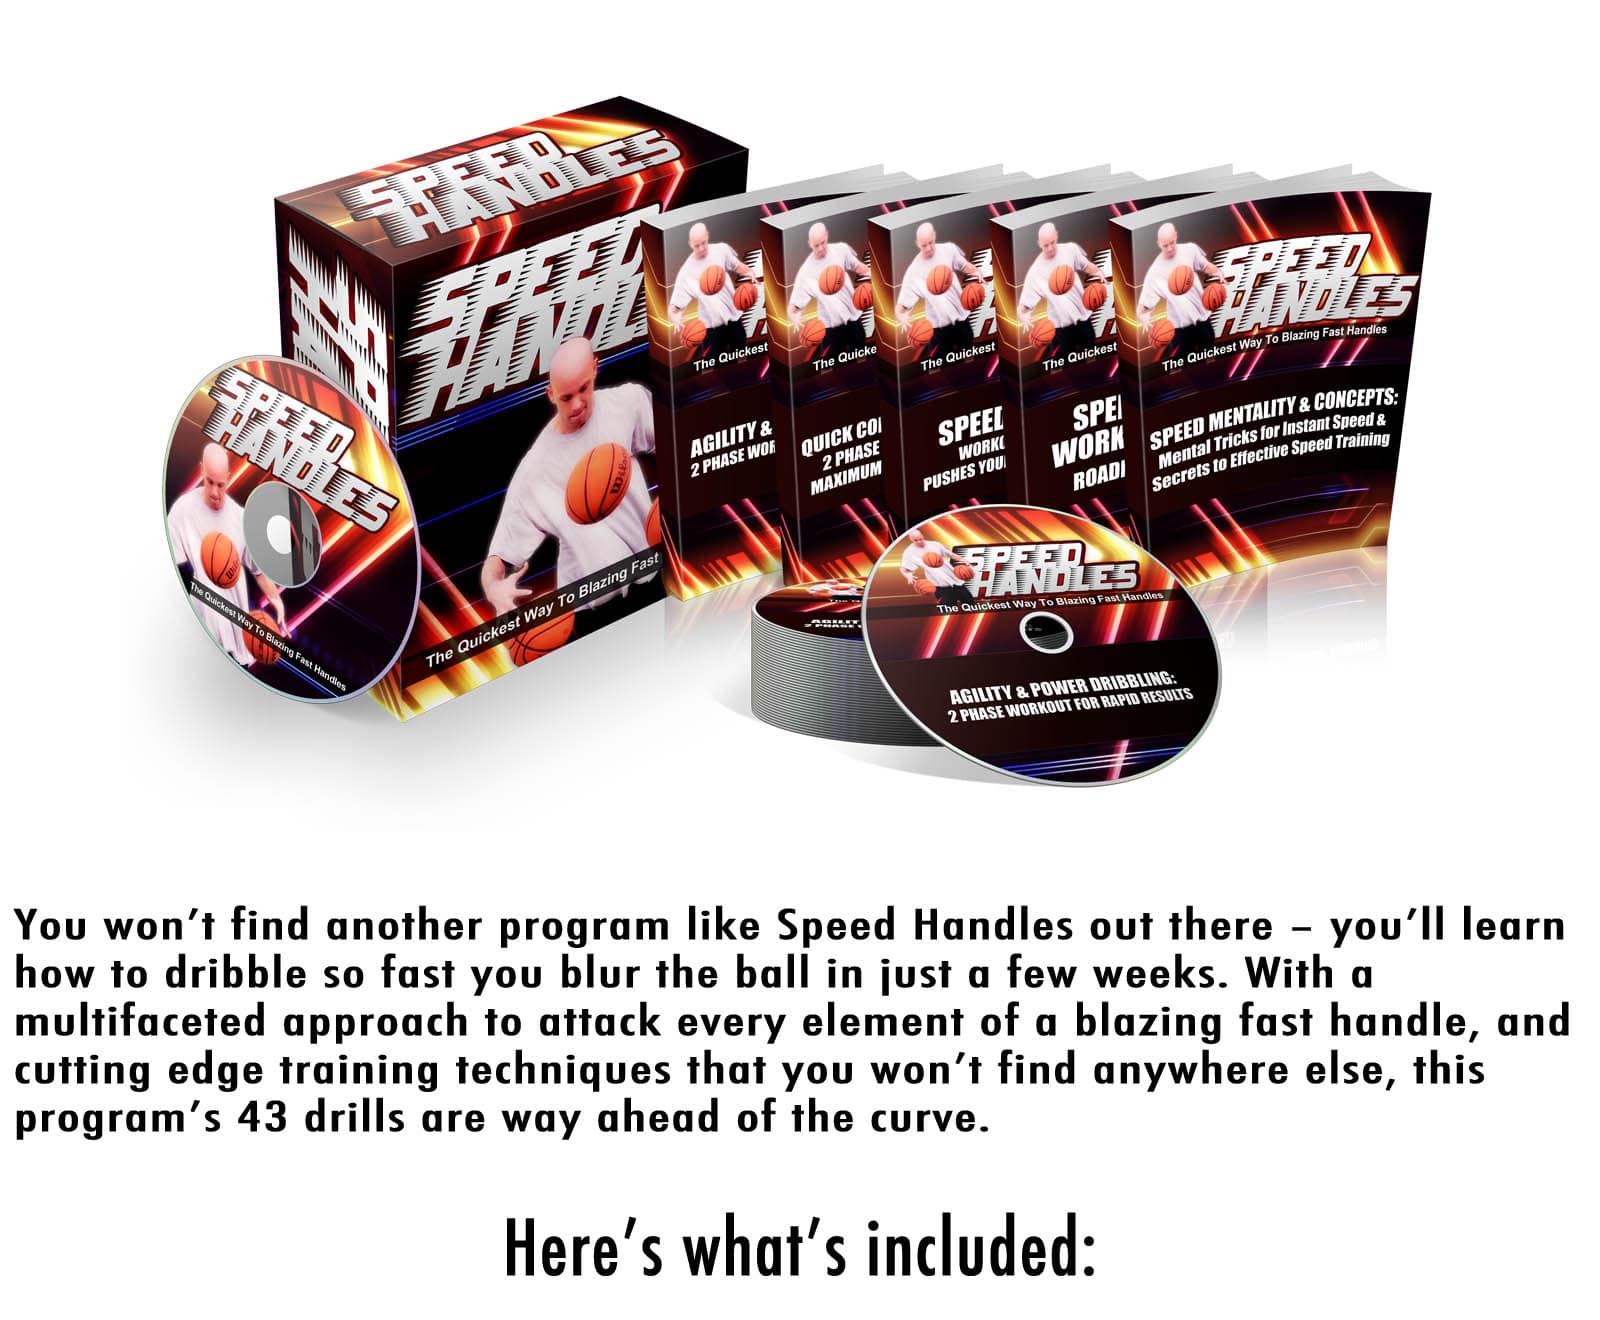 Speed Handles Product Box & Description